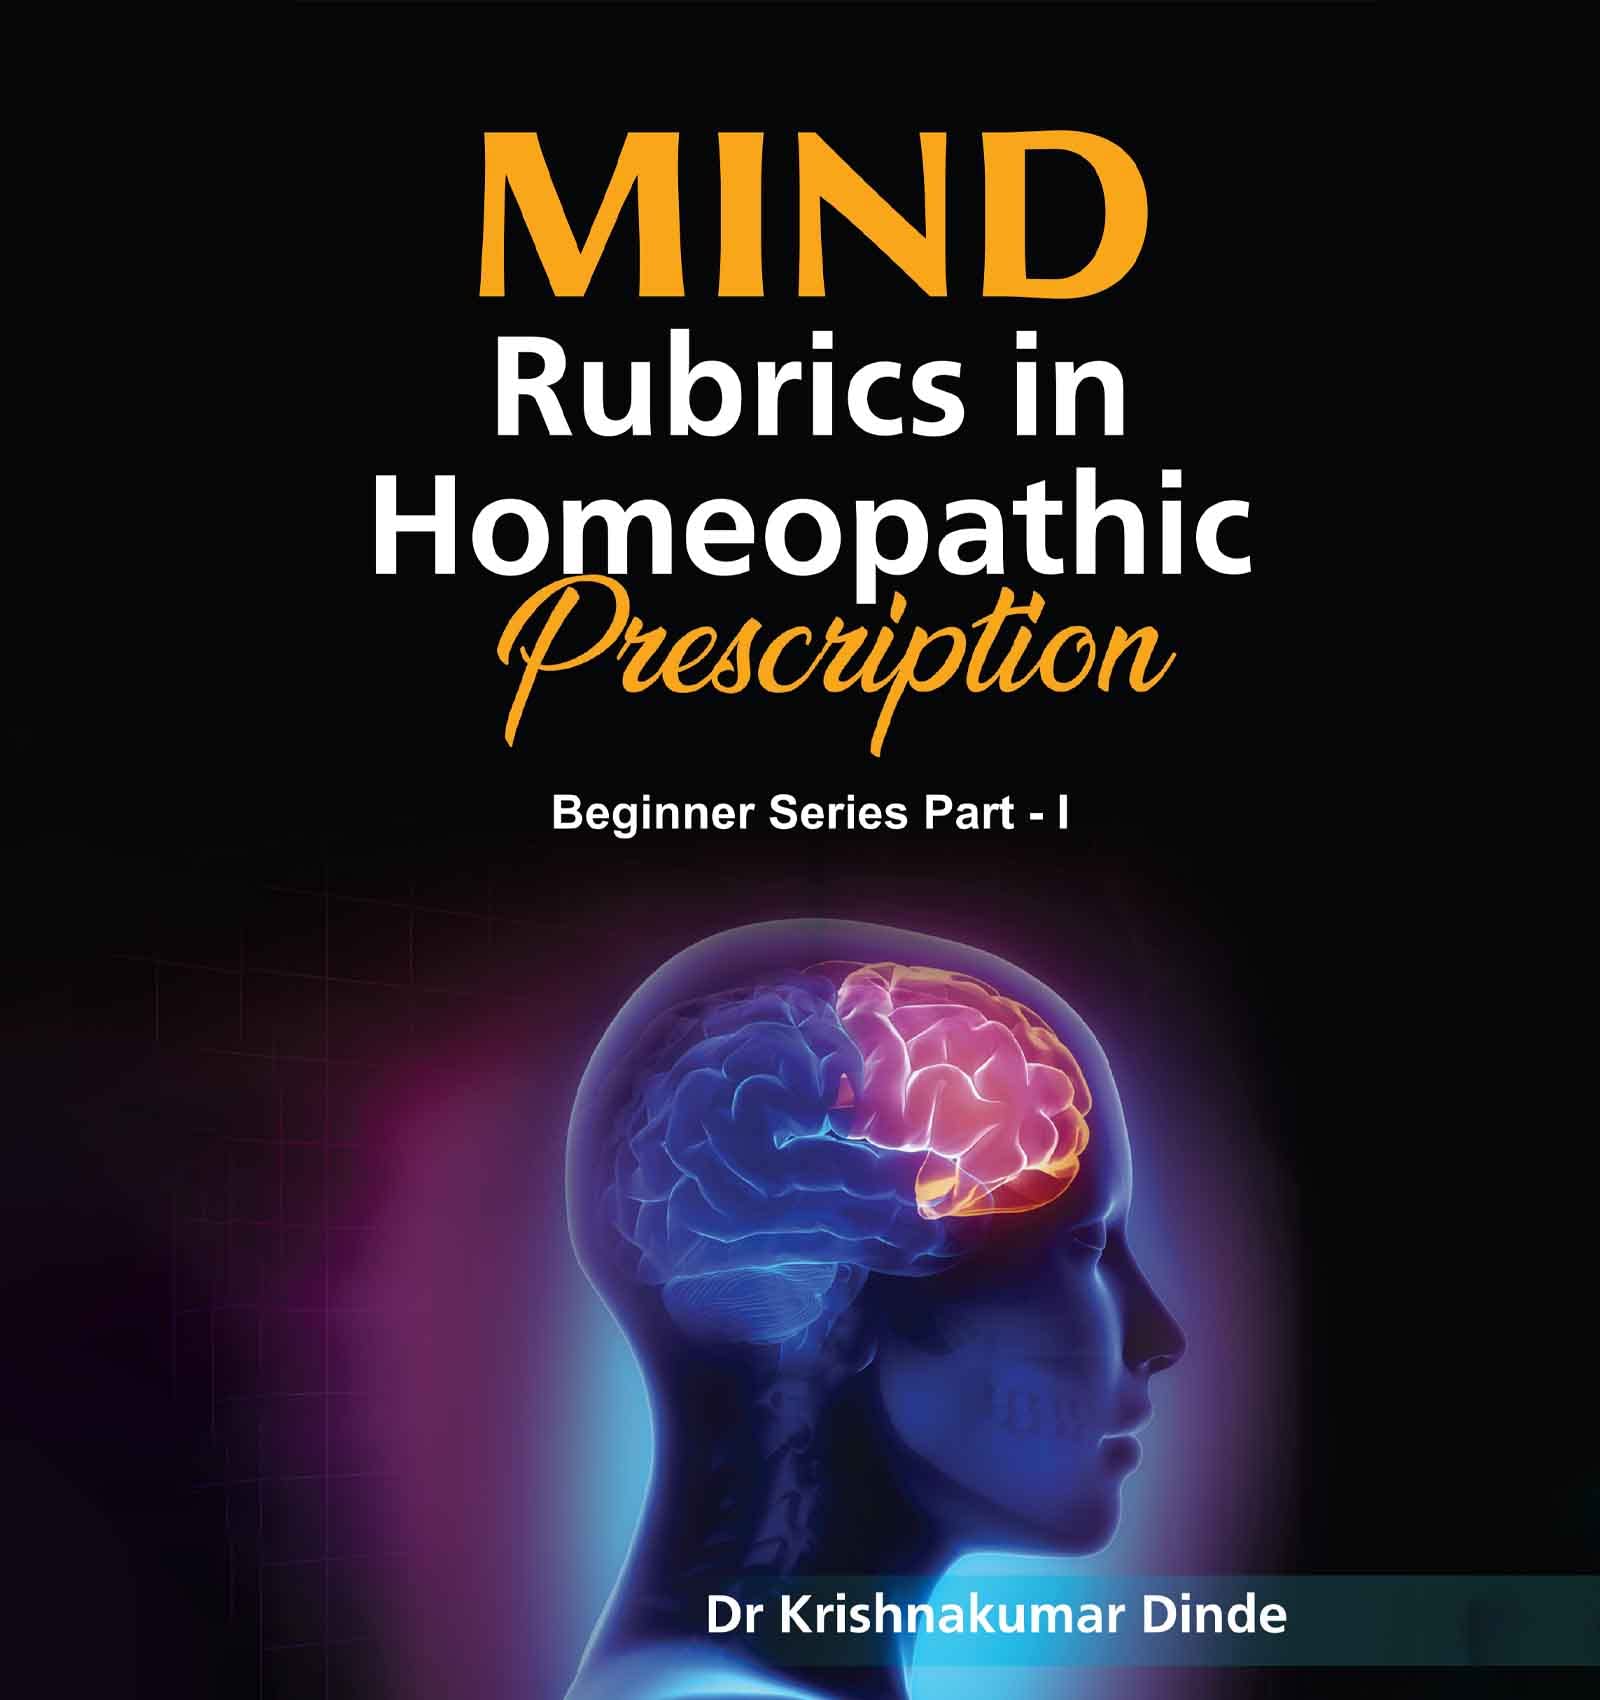 mind-rubrics-in-homeopathic-prescription-beginner-series-part-1